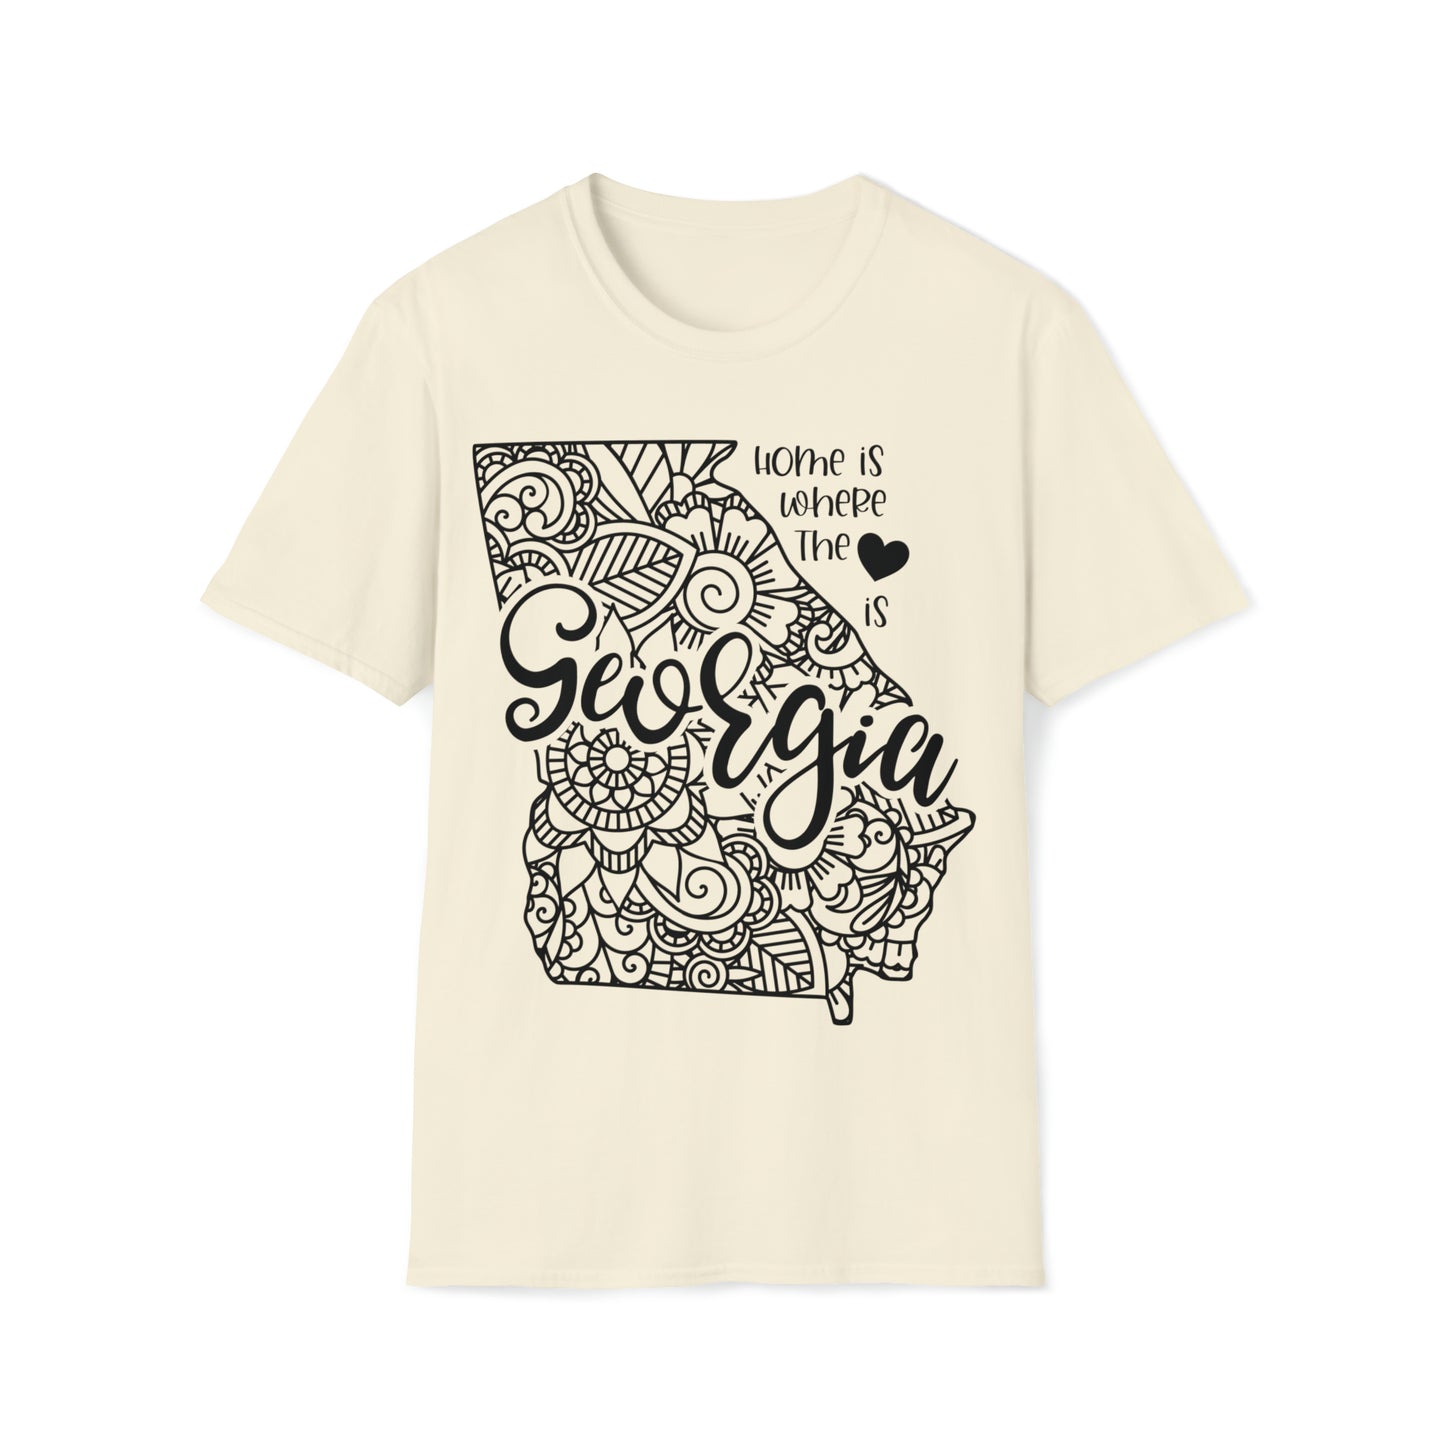 Georgia is Where the Heart is T-Shirt